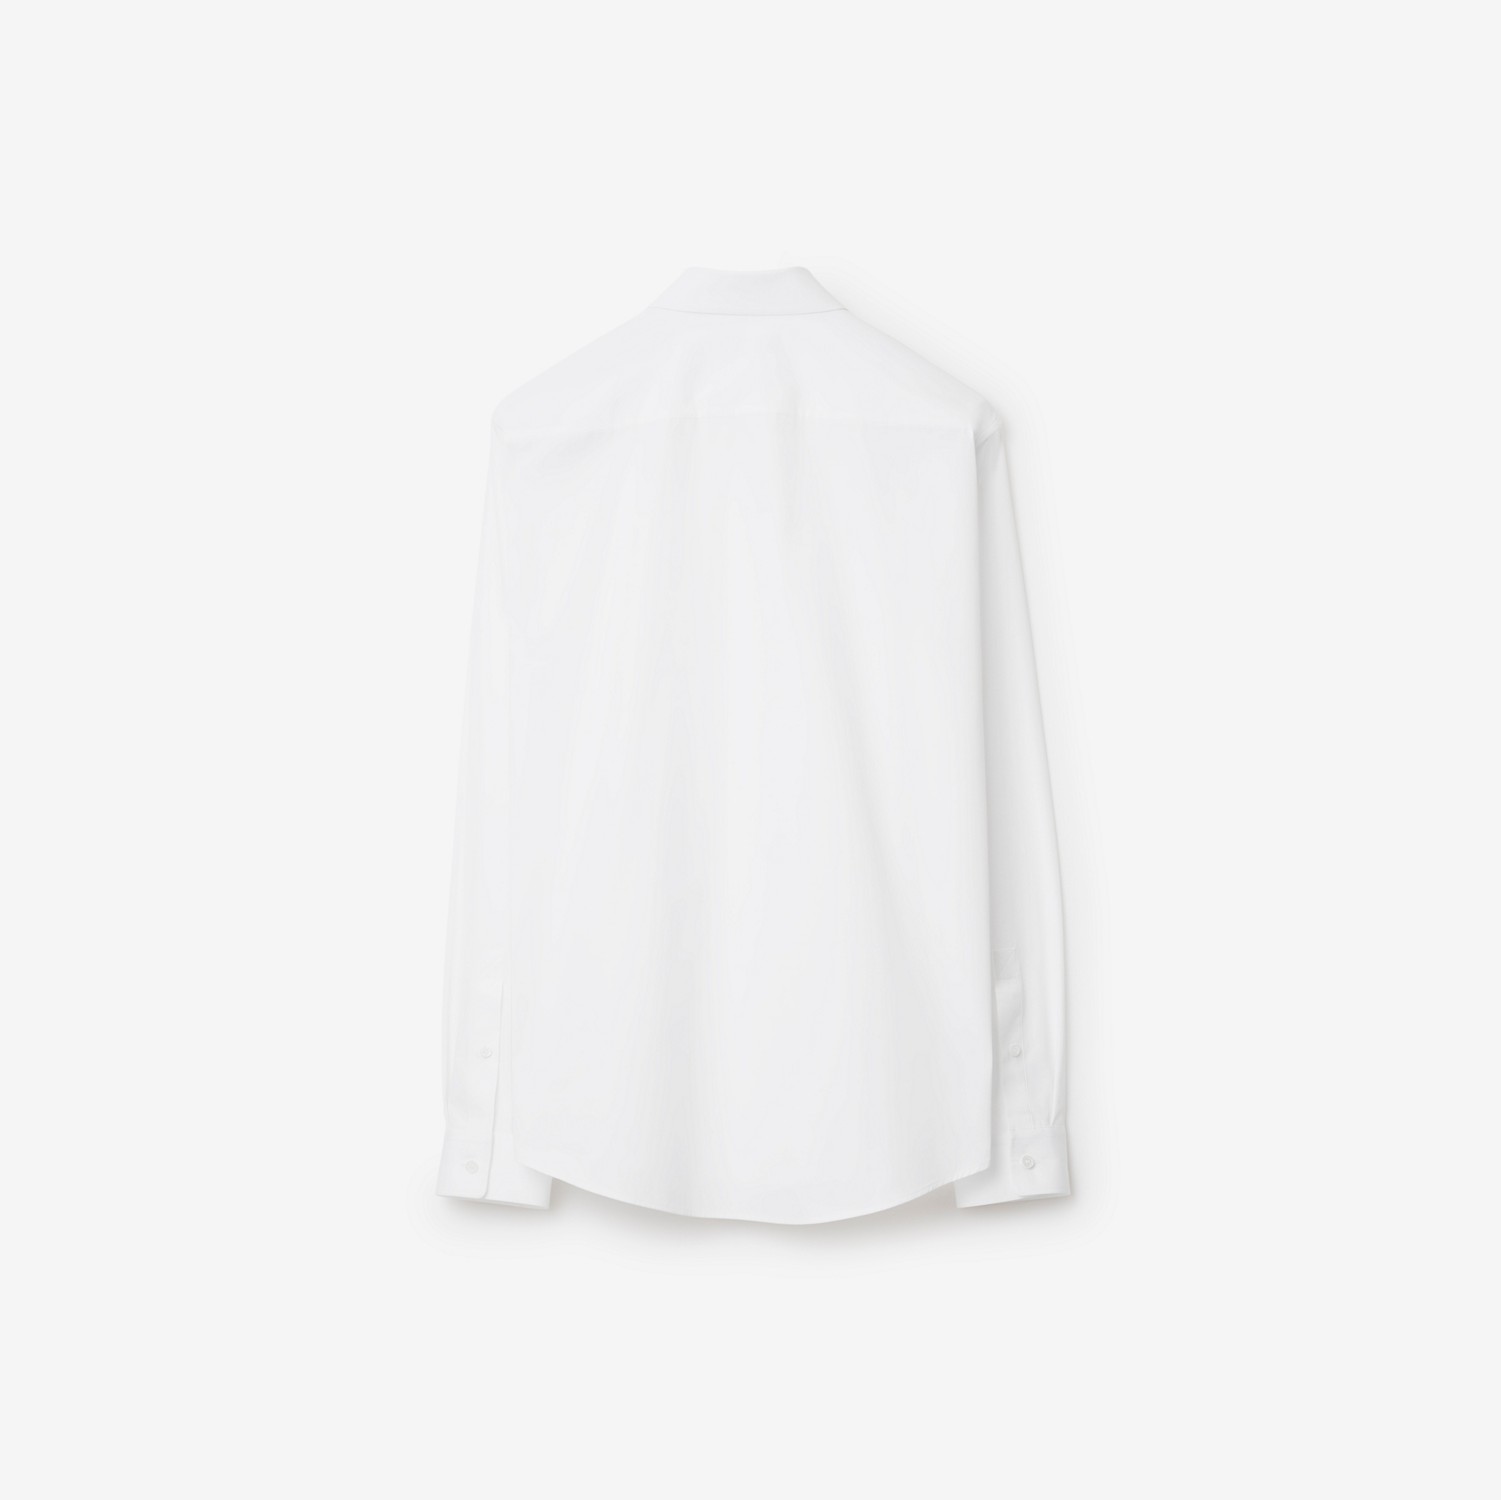 Cotton Formal Shirt